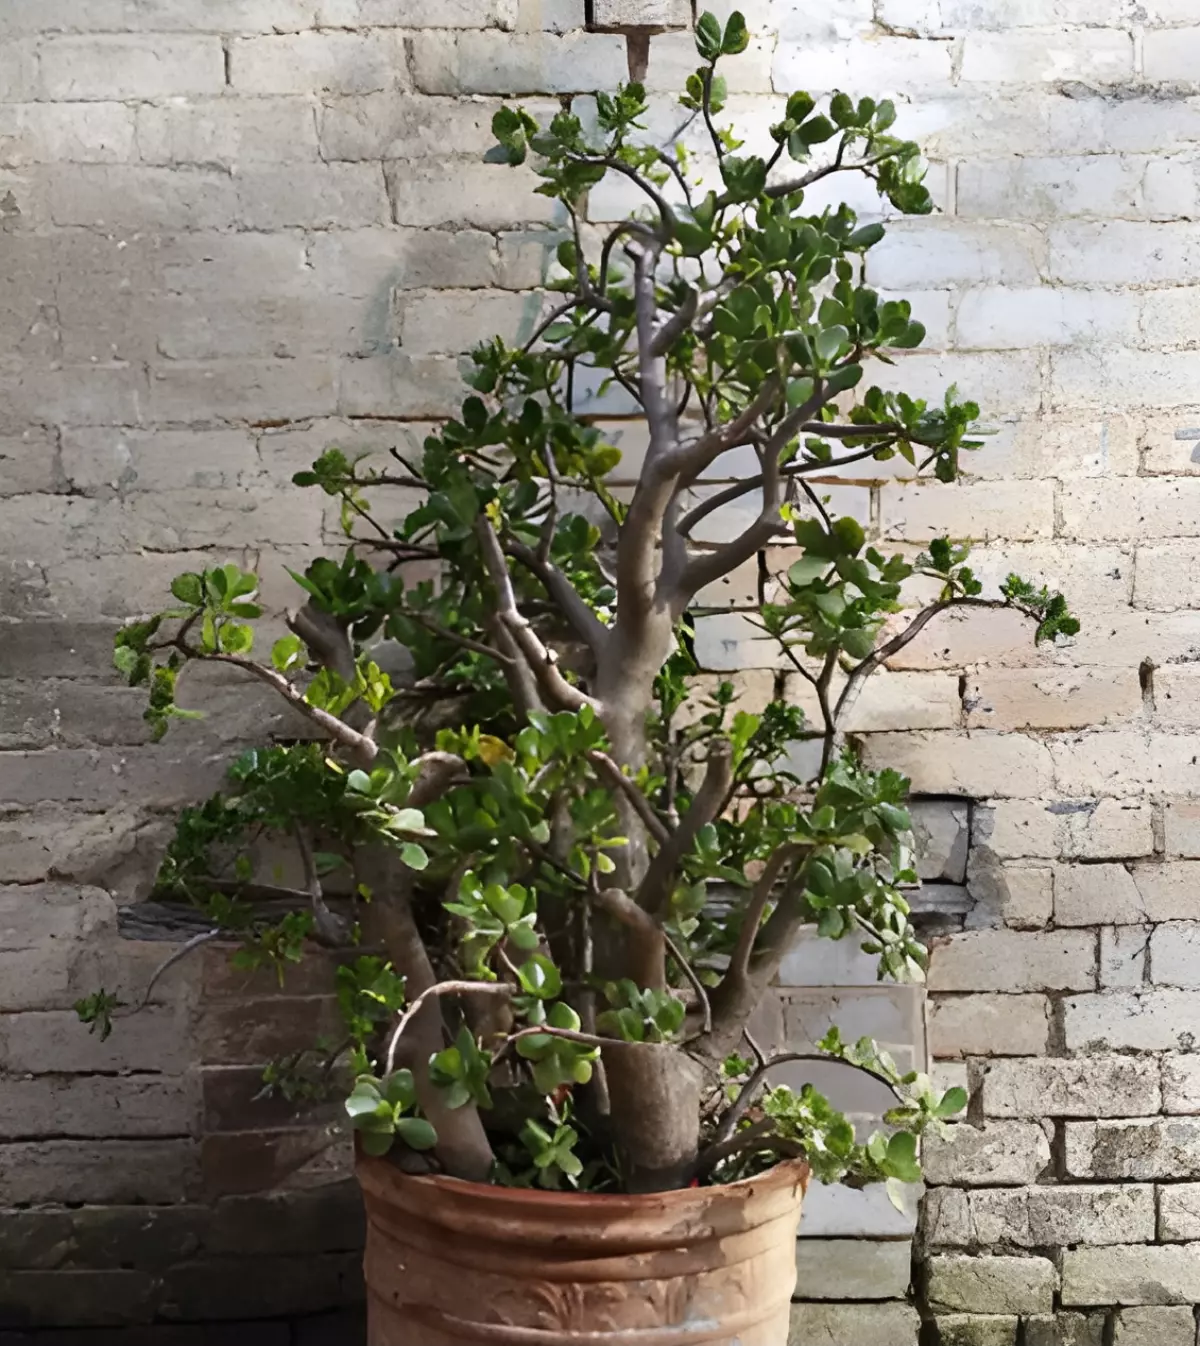 arbre de jade dans un pot sur fond d un mur en briques